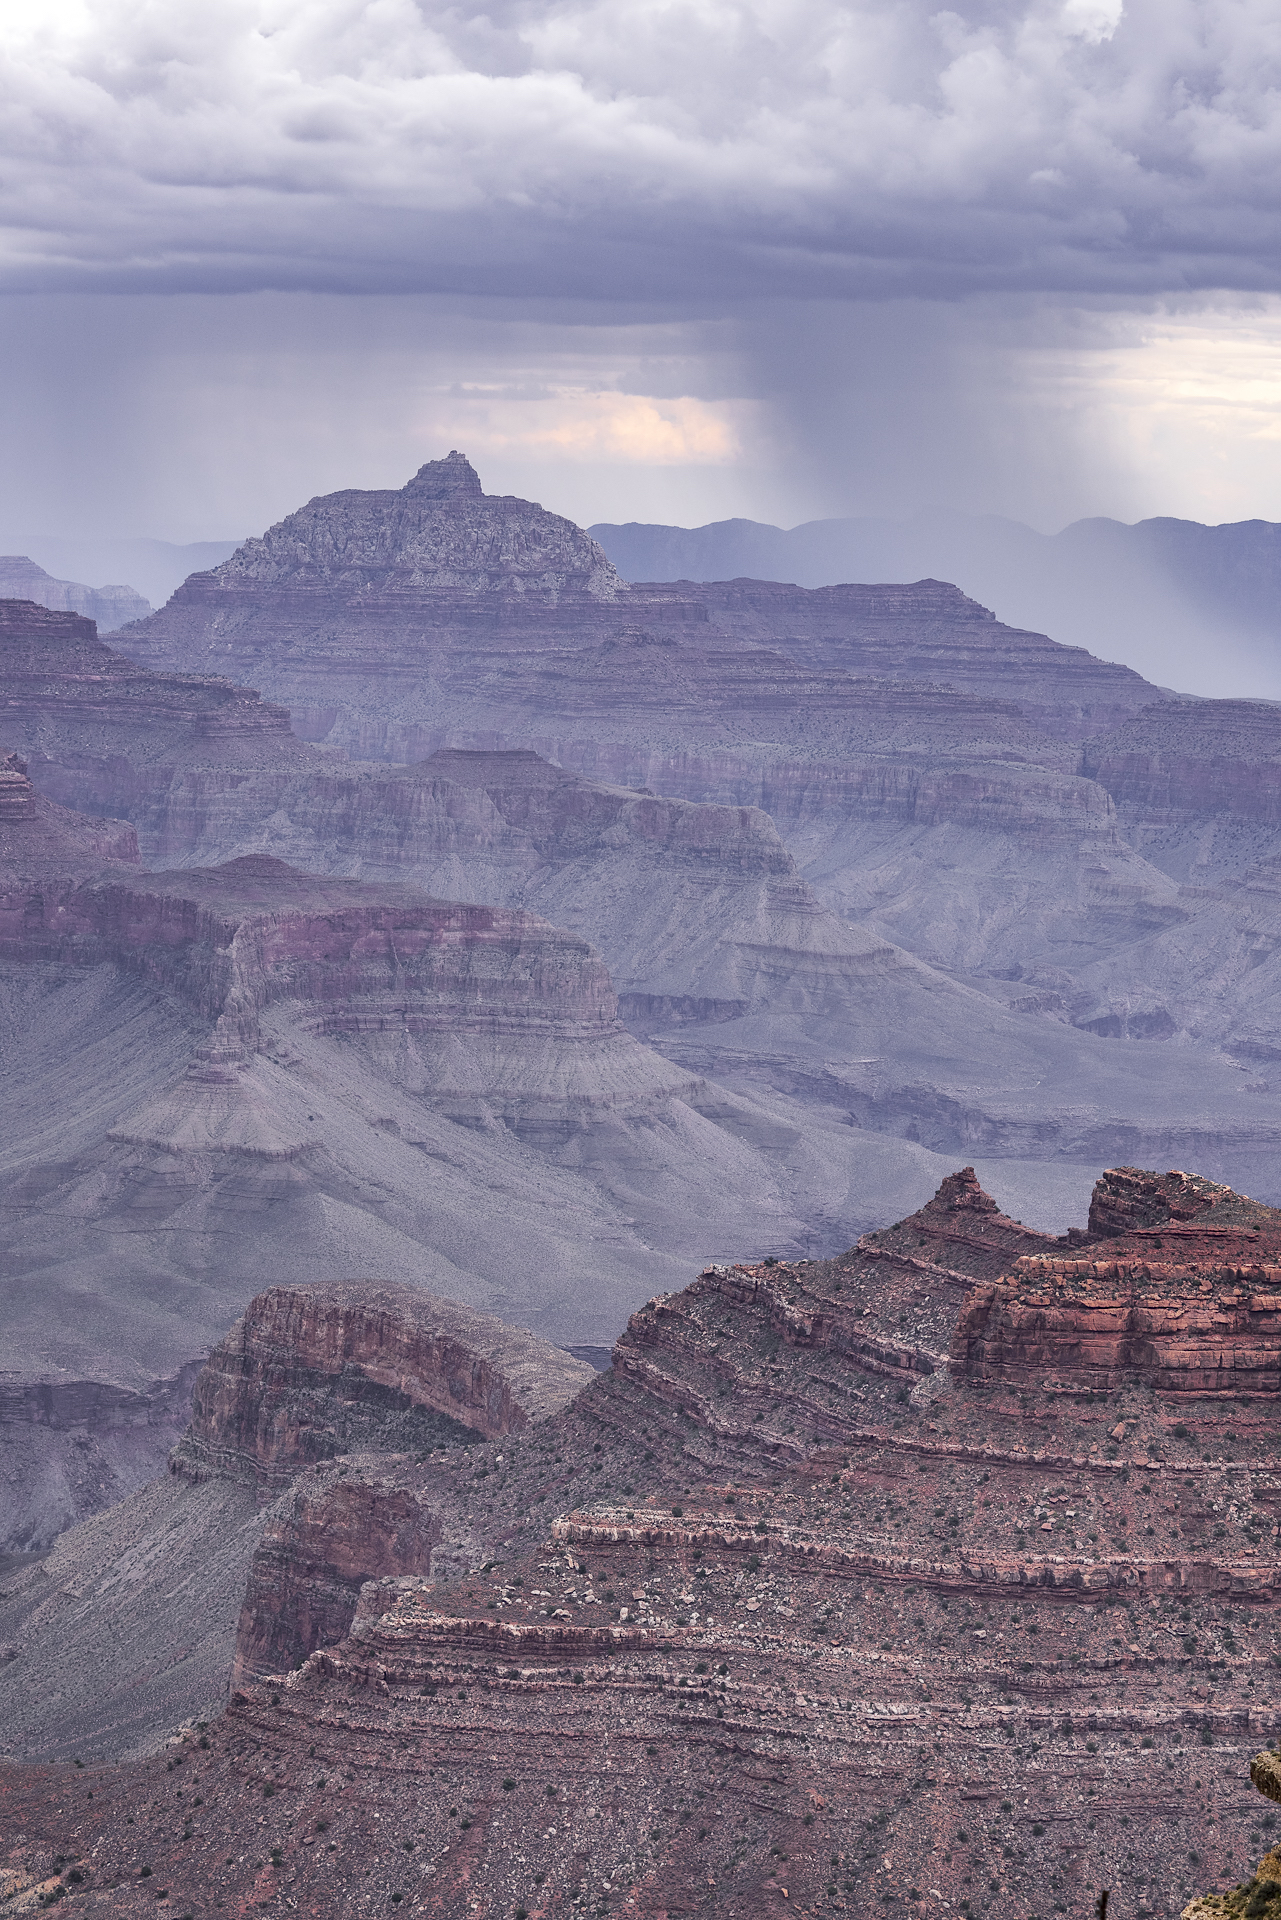 Heavy rain shower over the Grand Canyon, AZ, from Yaki Point